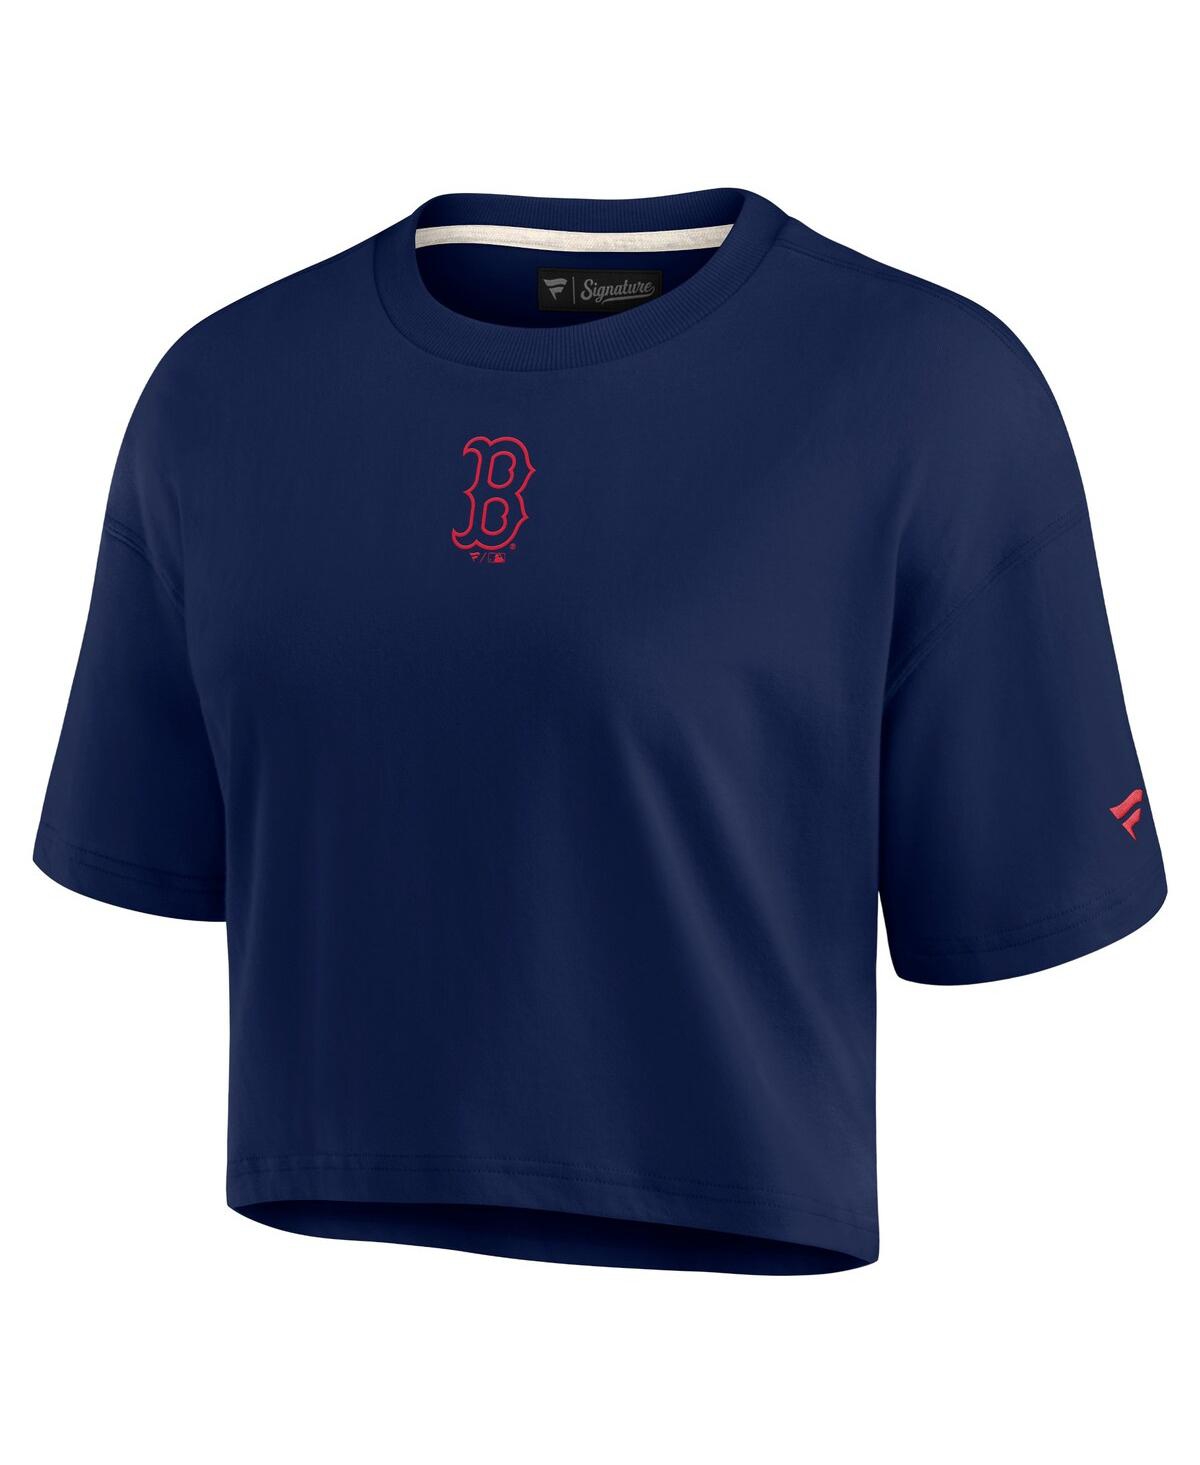 Shop Fanatics Signature Women's  Navy Boston Red Sox Super Soft Short Sleeve Cropped T-shirt